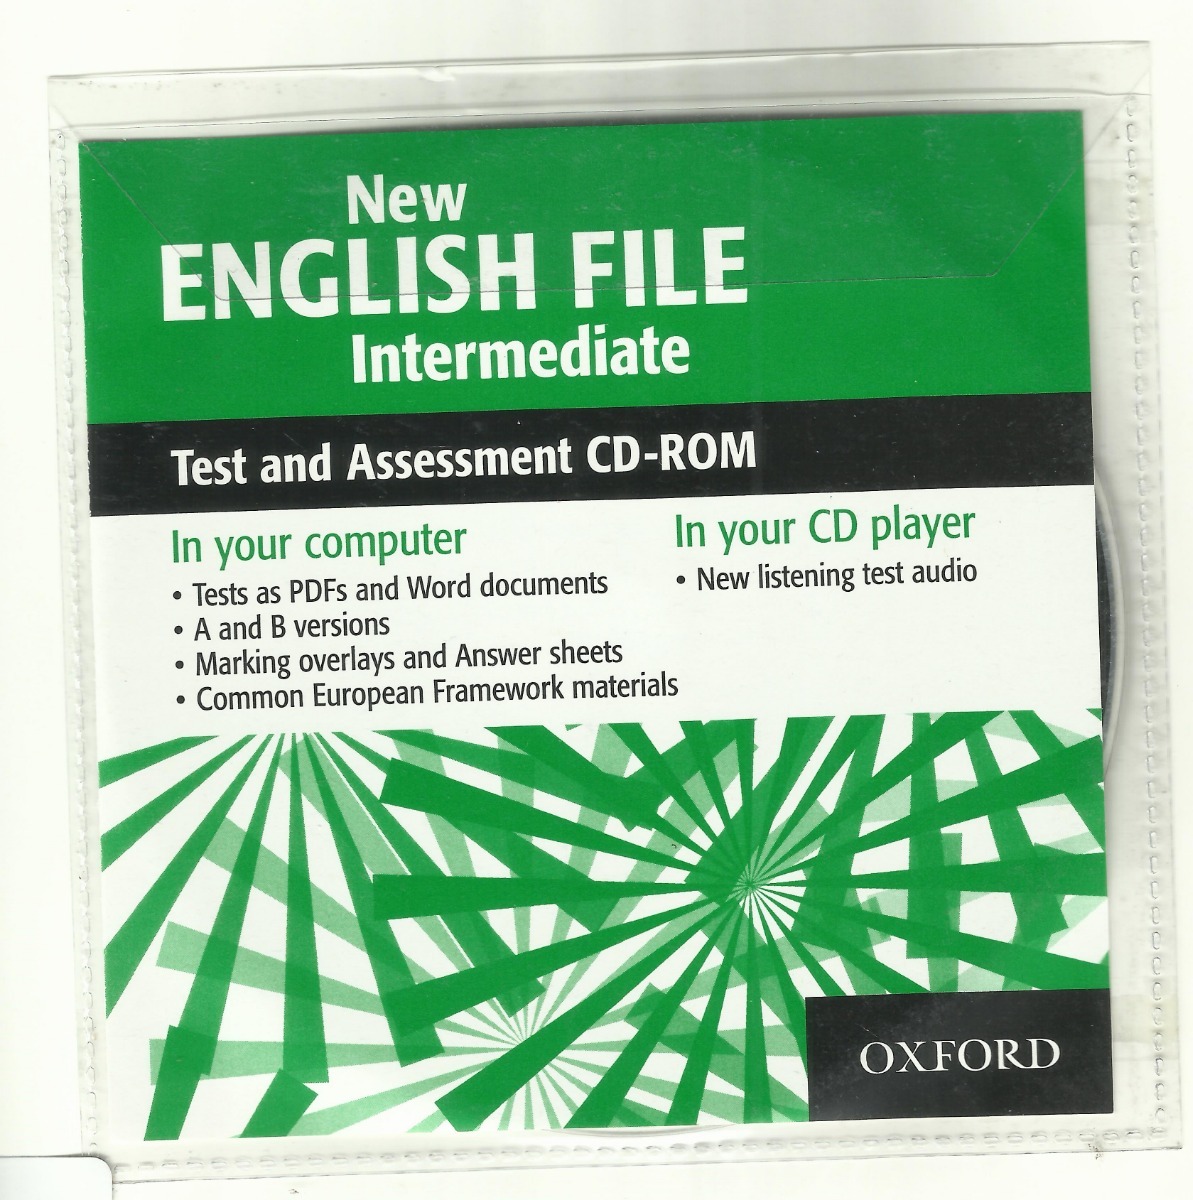 New English file Intermediate. Mood food English file Intermediate. English file Upper Intermediate Tests. 5.6 New English file Intermediate. English file intermediate vocabulary